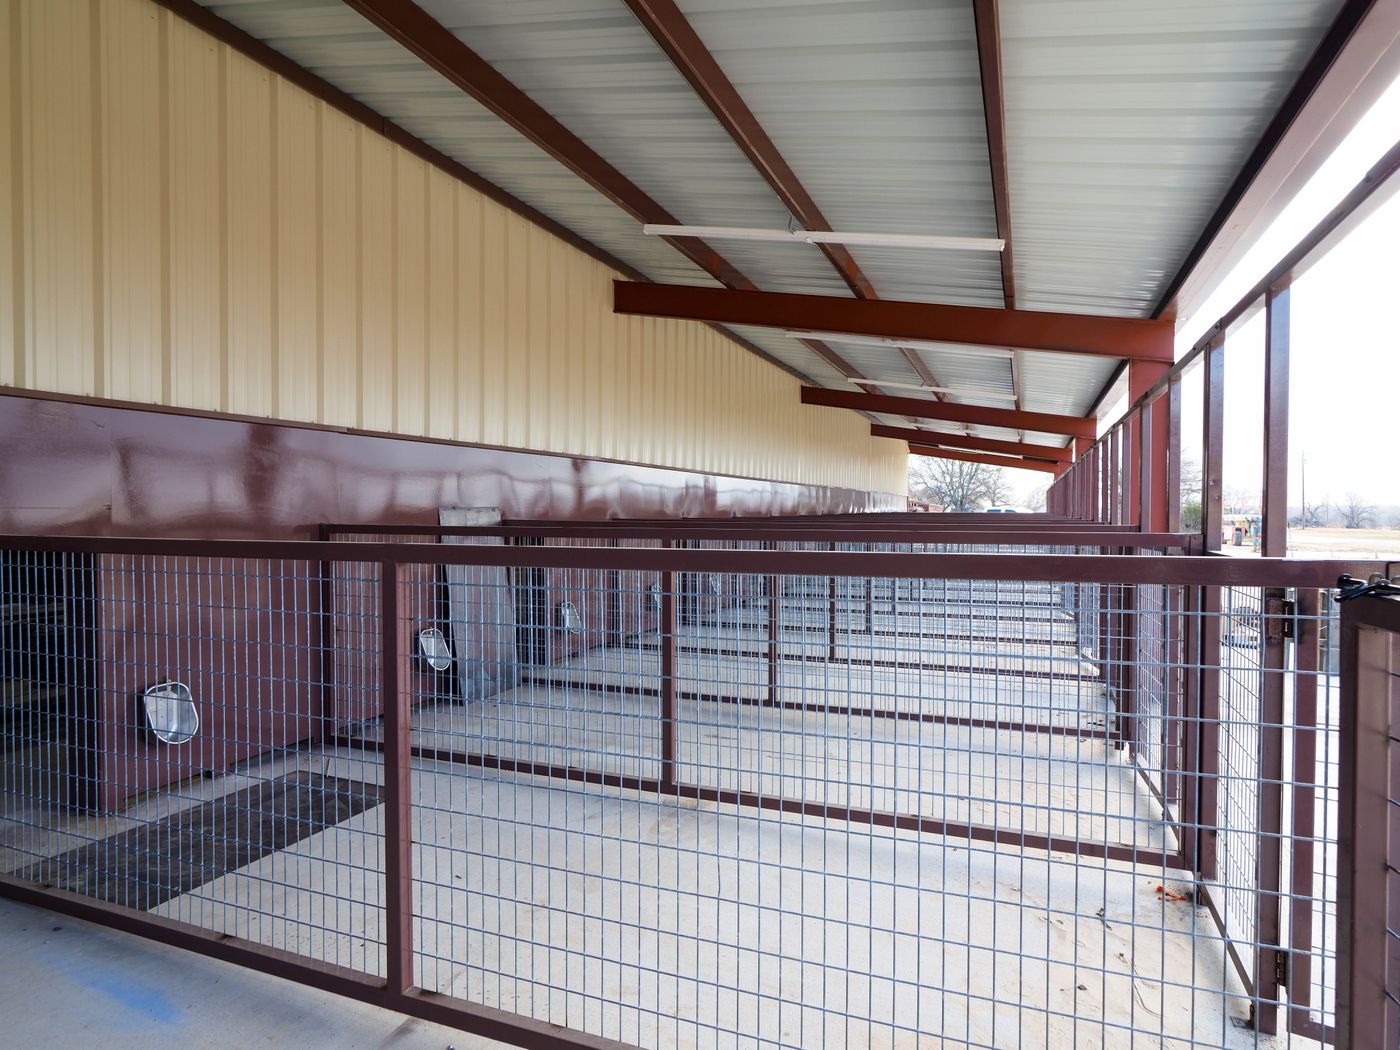 HISD Animal Barn and Practice Facility